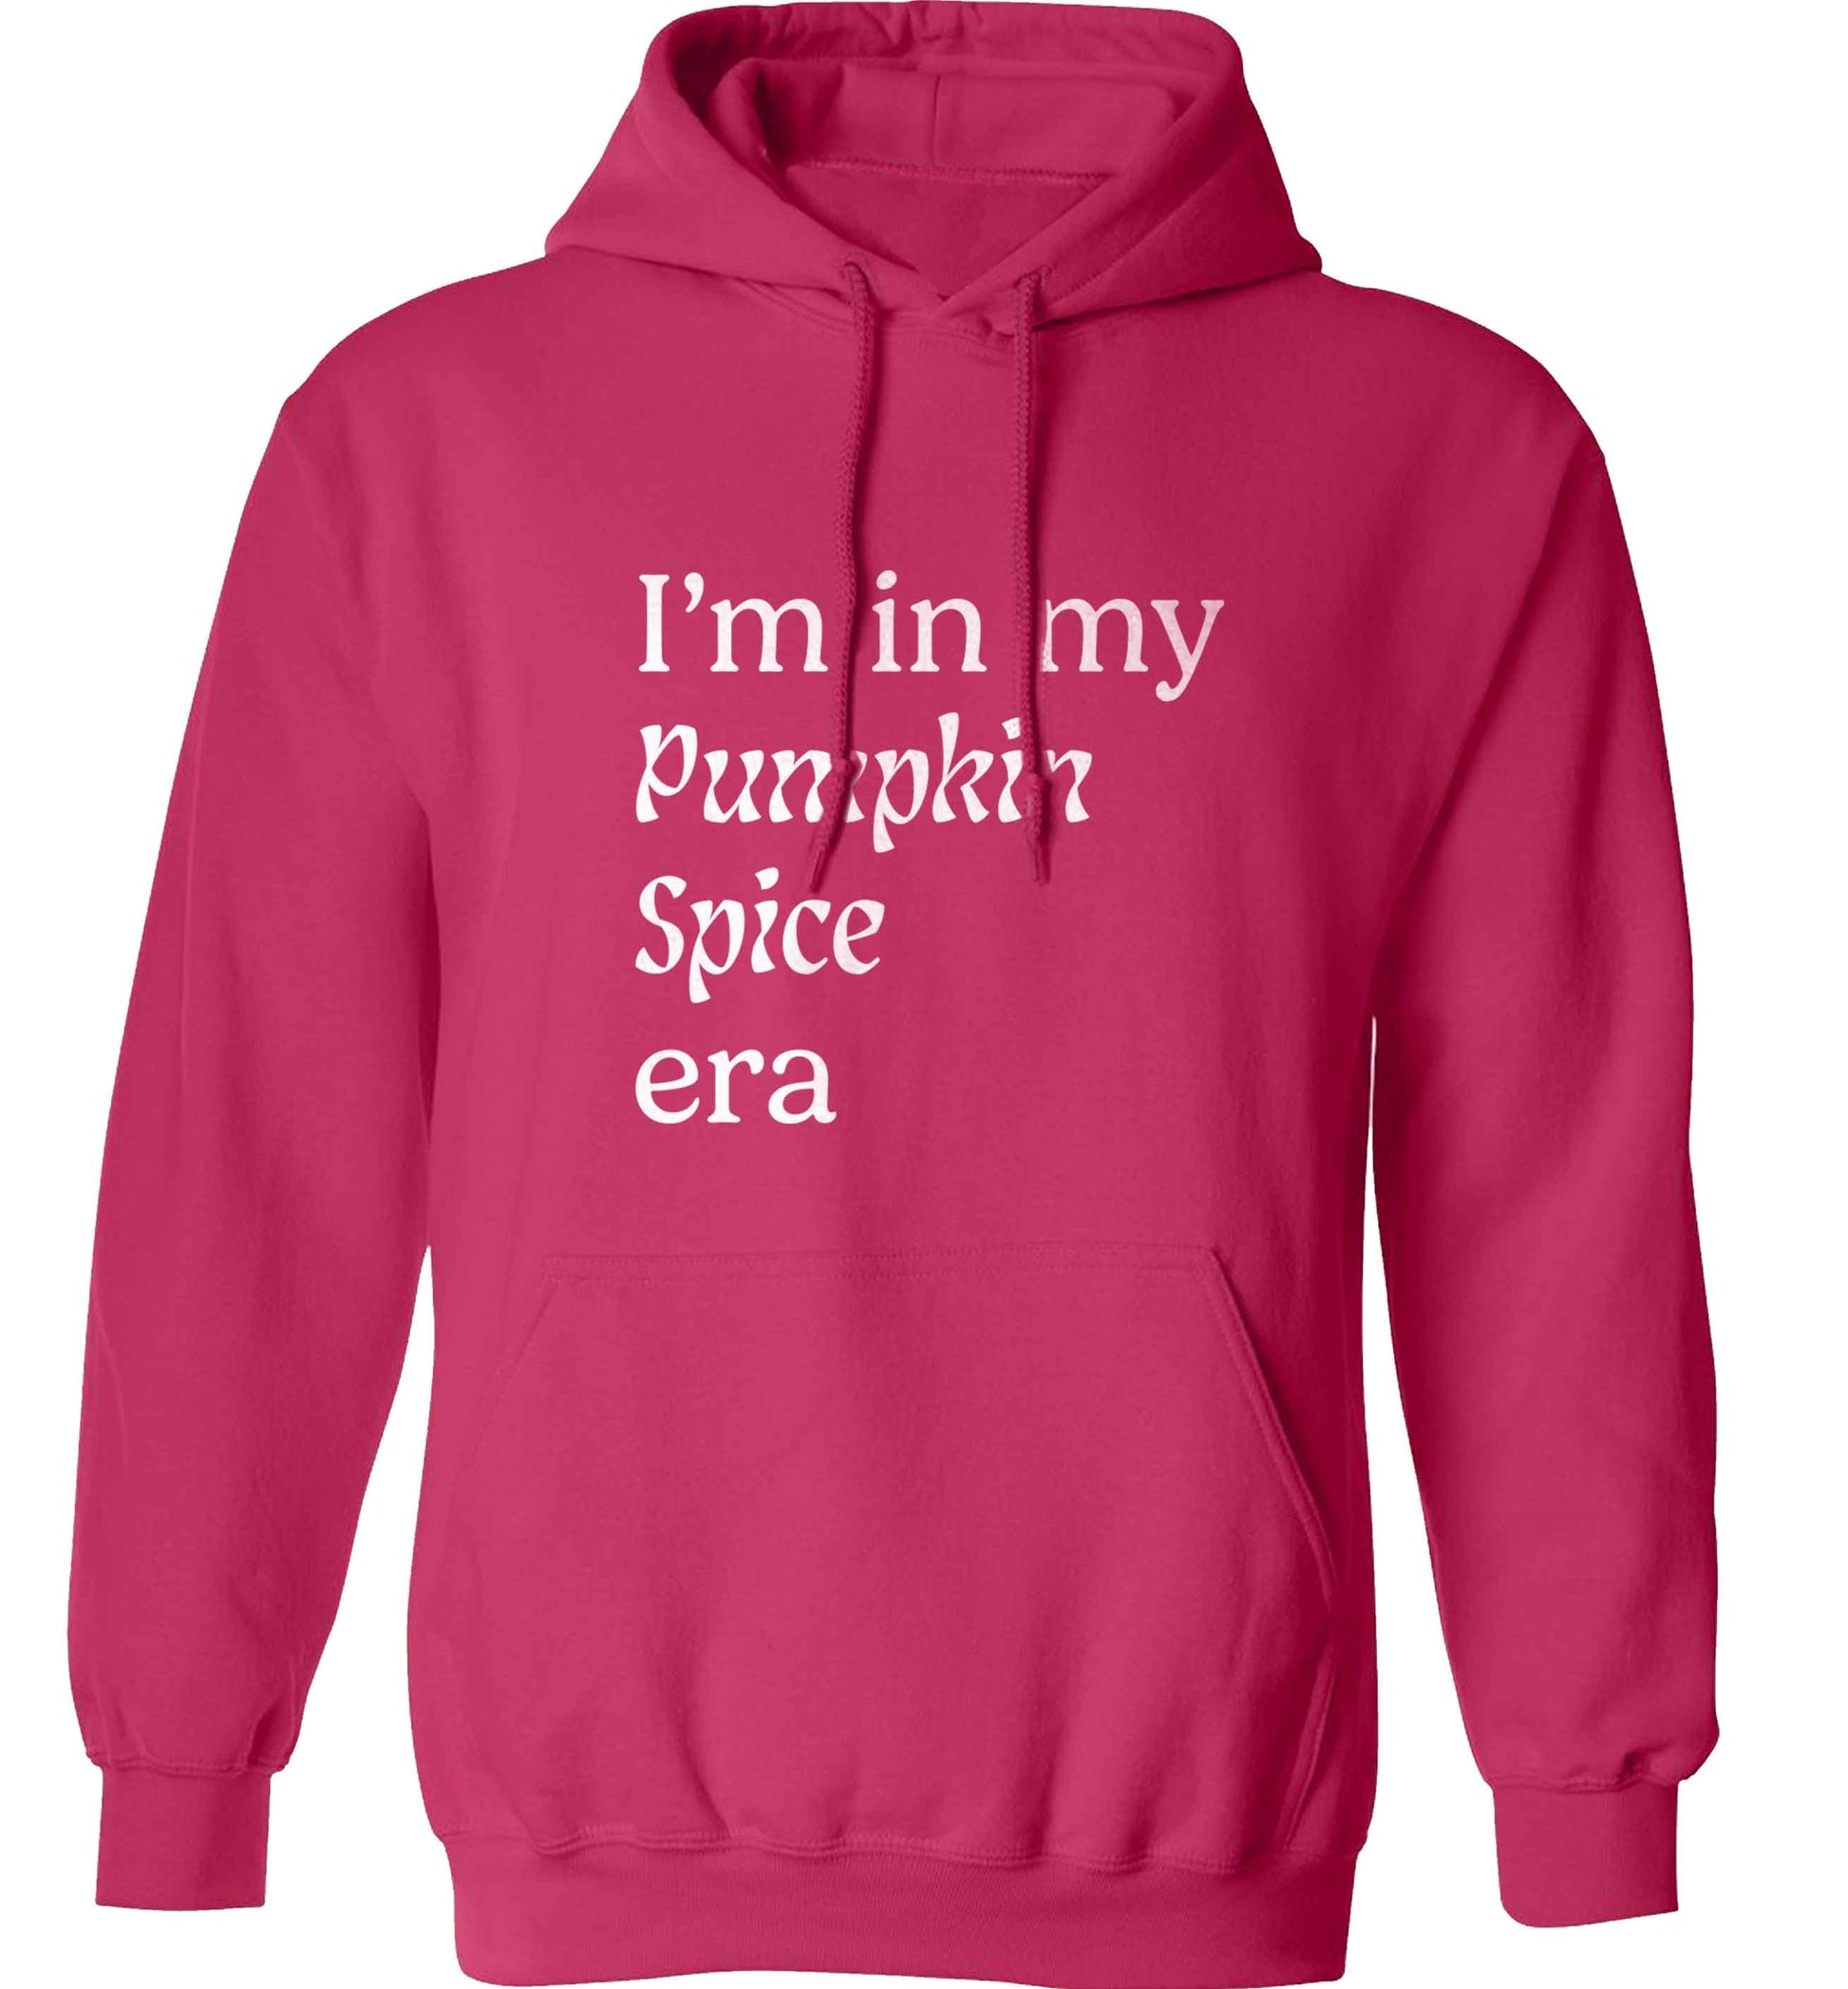 I'm in my pumpkin spice era Kit adults unisex pink hoodie 2XL